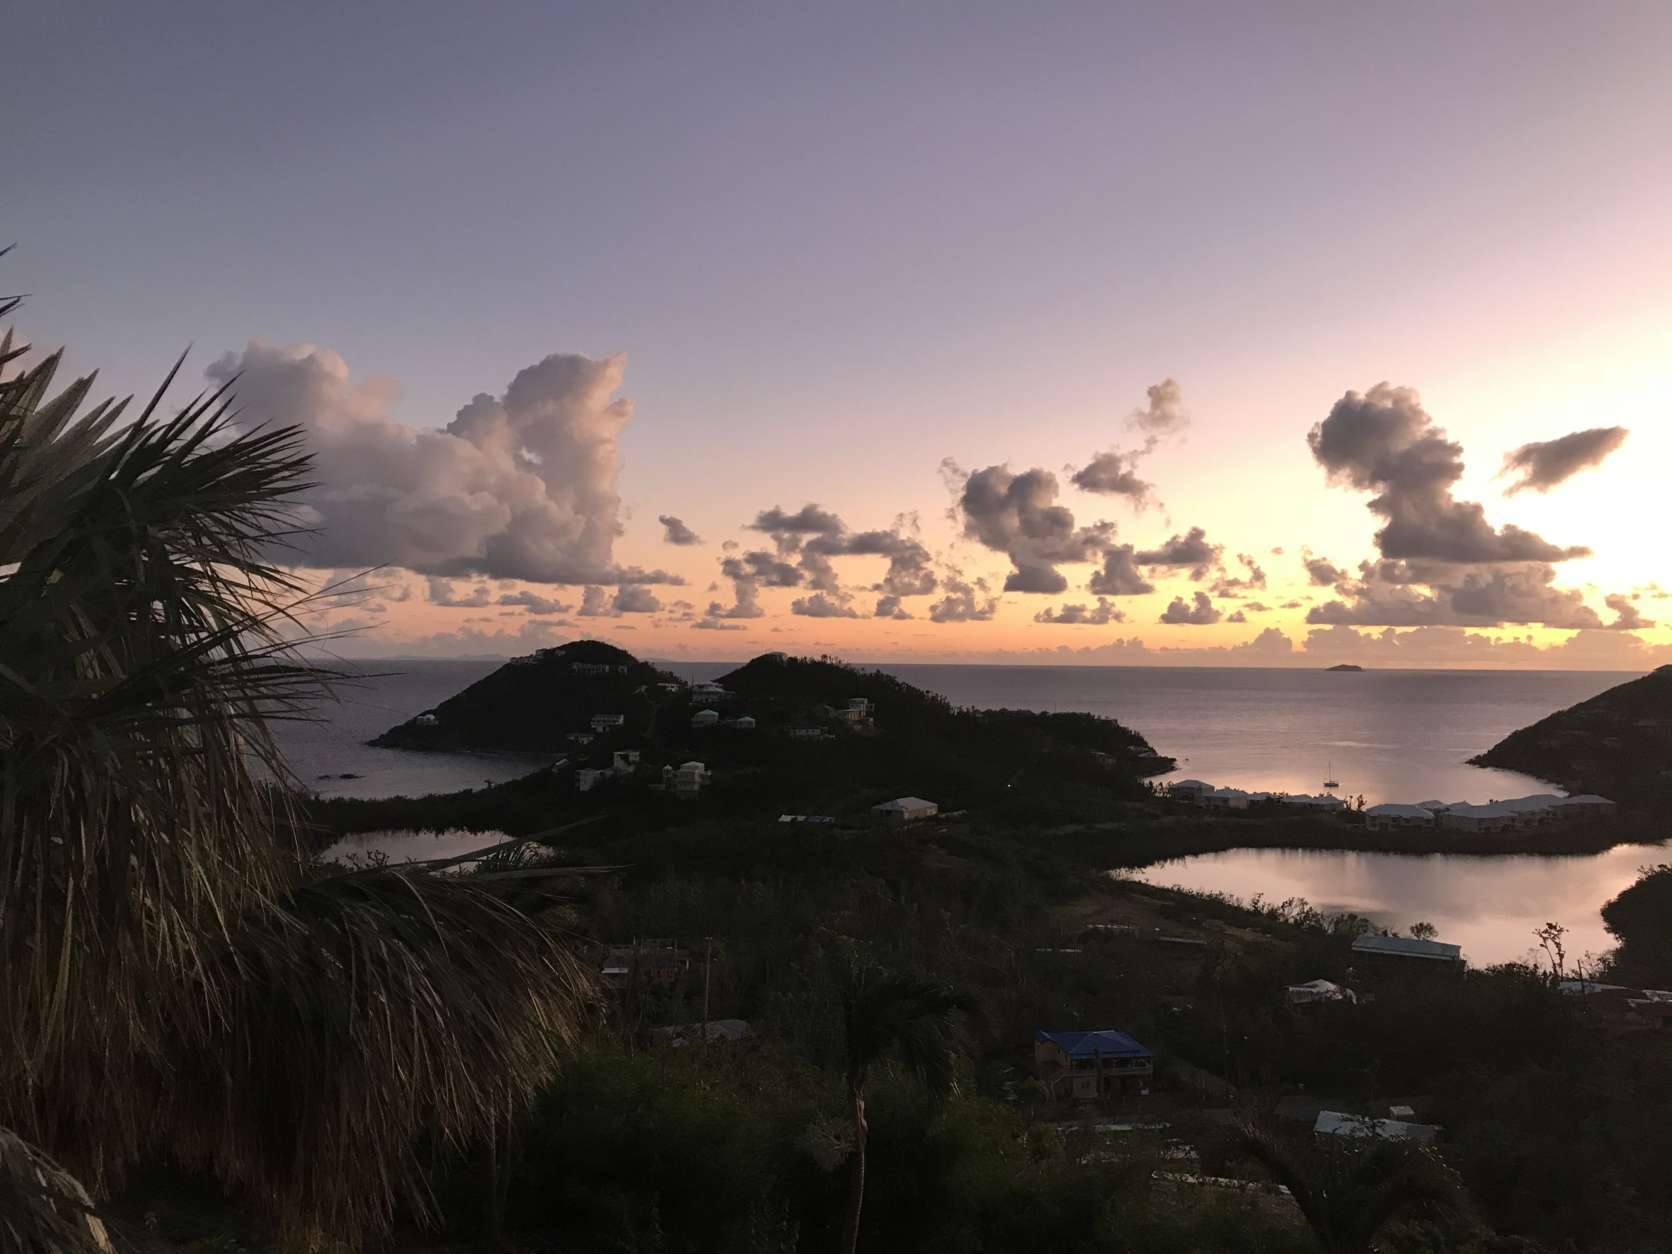 Despite the damage, St. John's sunsets are still amazing. (WTOP/Jeff Clabaugh)